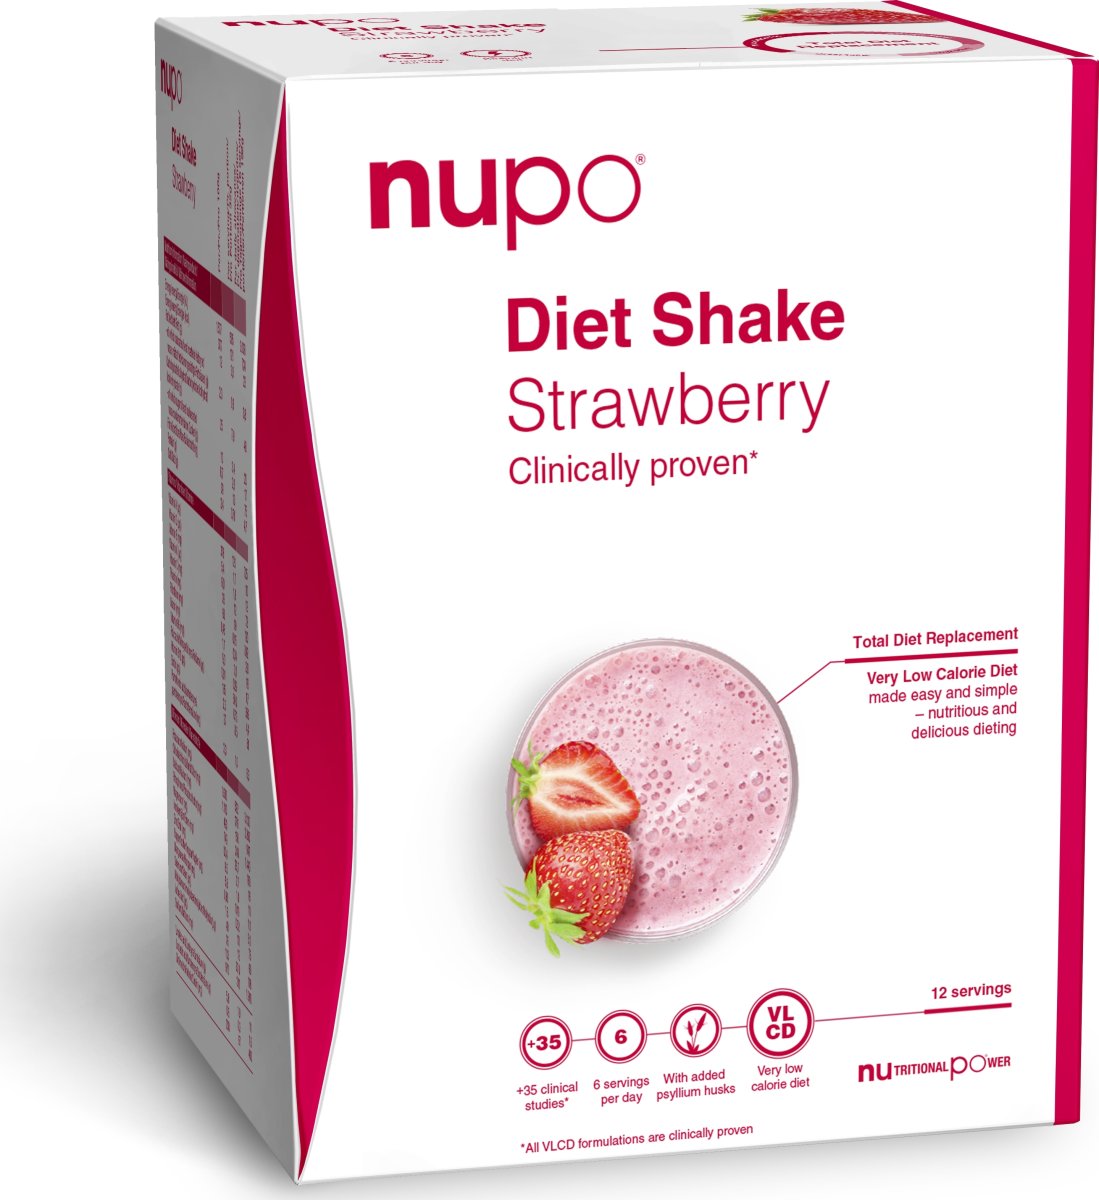 Nupo Diet Shake Jordbær, 384 g